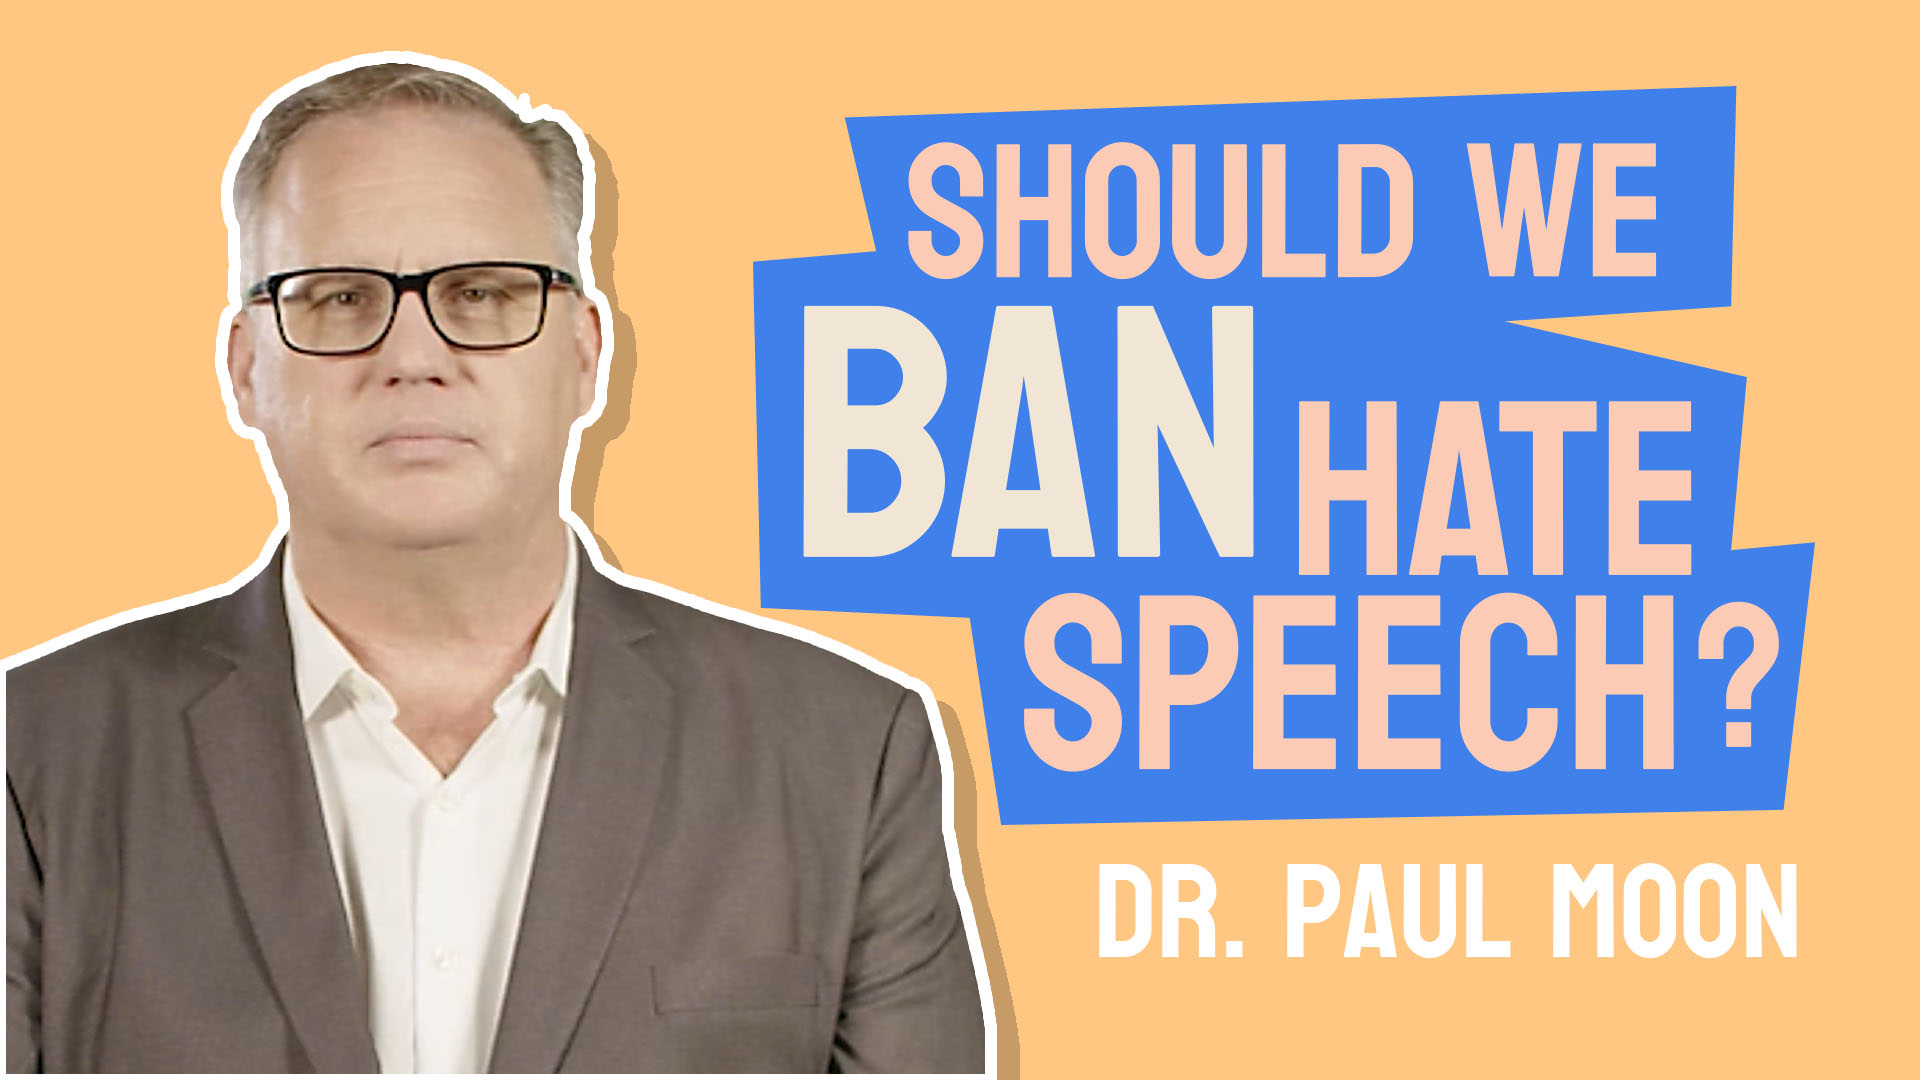 Dr Paul Moon: Should we ban hate speech?